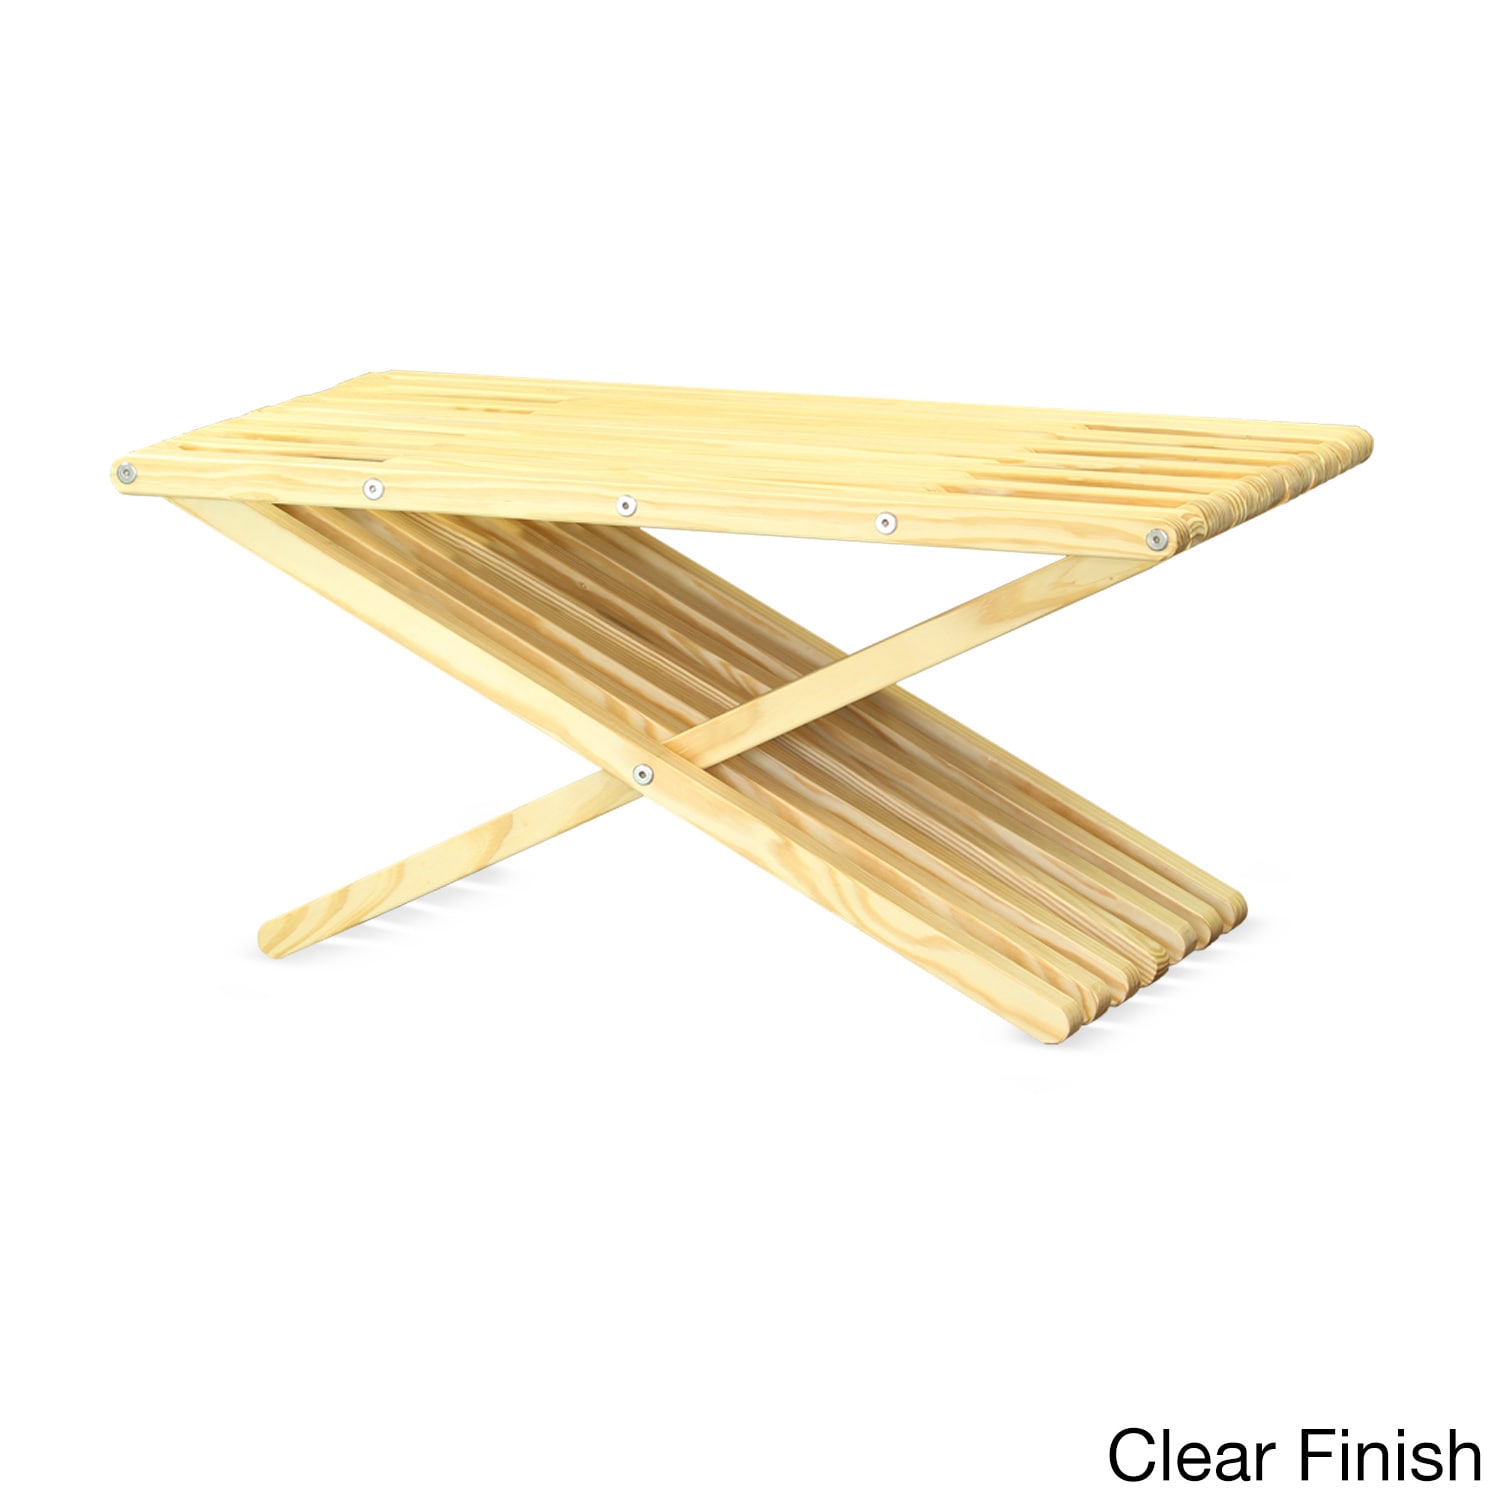 GloDea Eco Friendly Wood Coffee Table 20 x 36 by  Sky Blue - image 3 of 5